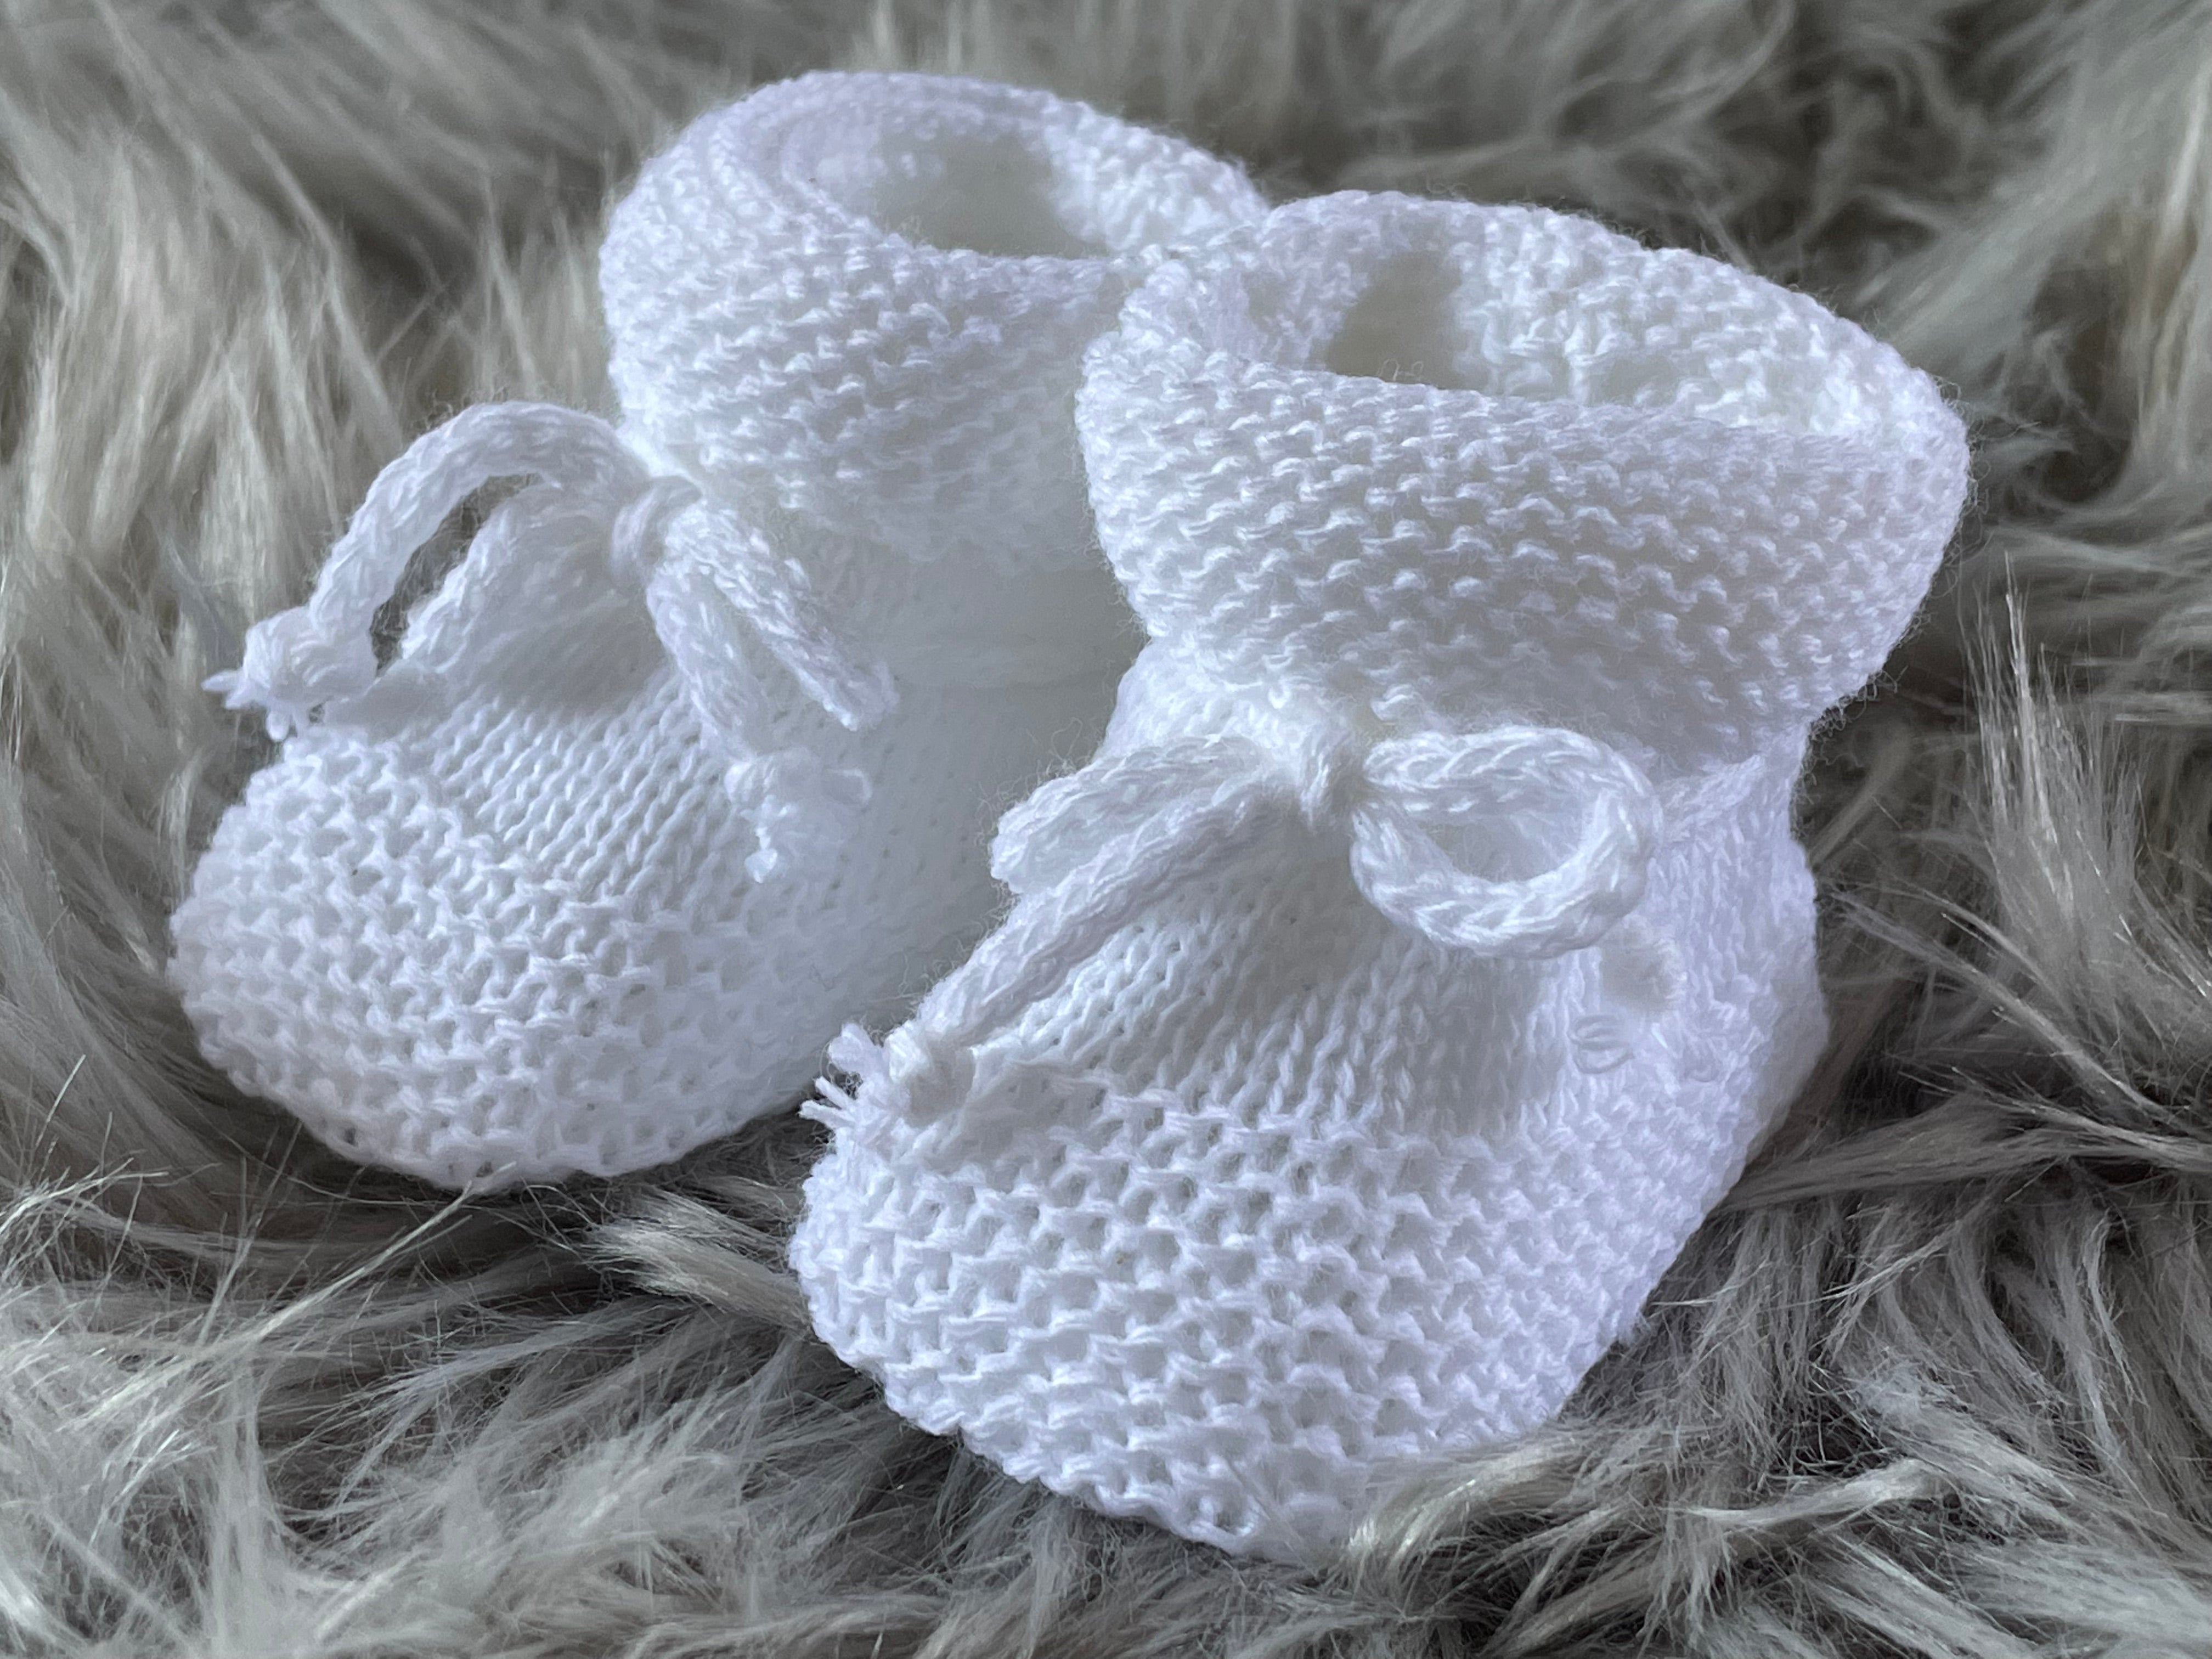 White Knitted Tie Up Newborn Baby Booties